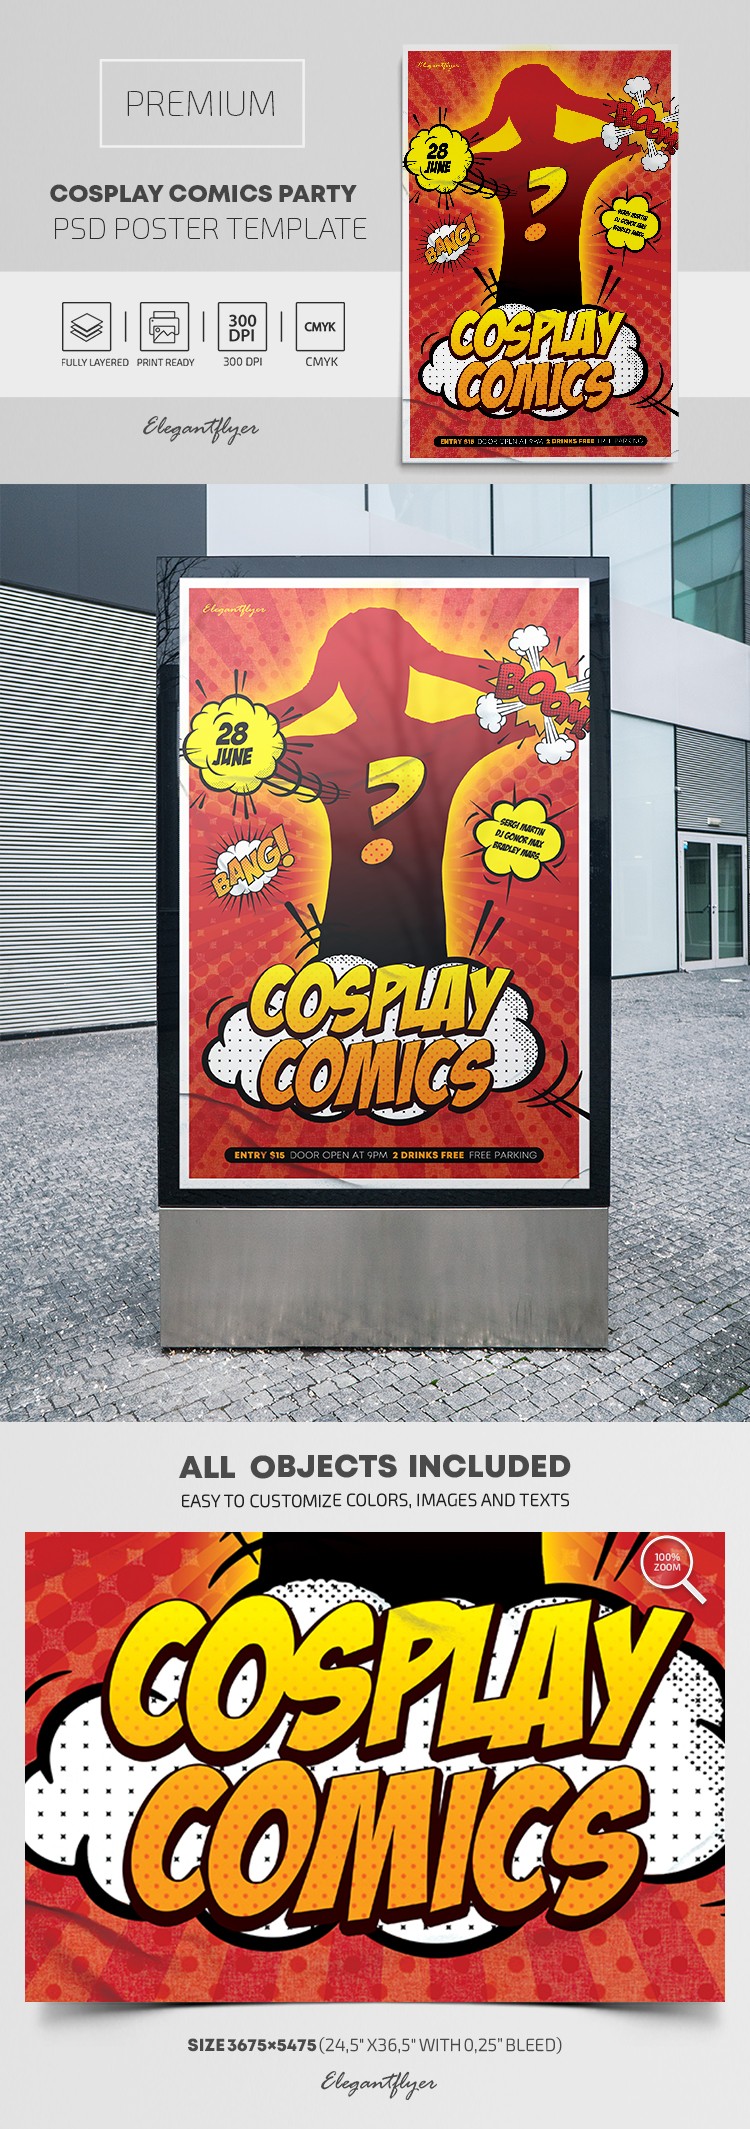 Cosplay Comics Party Poster by ElegantFlyer